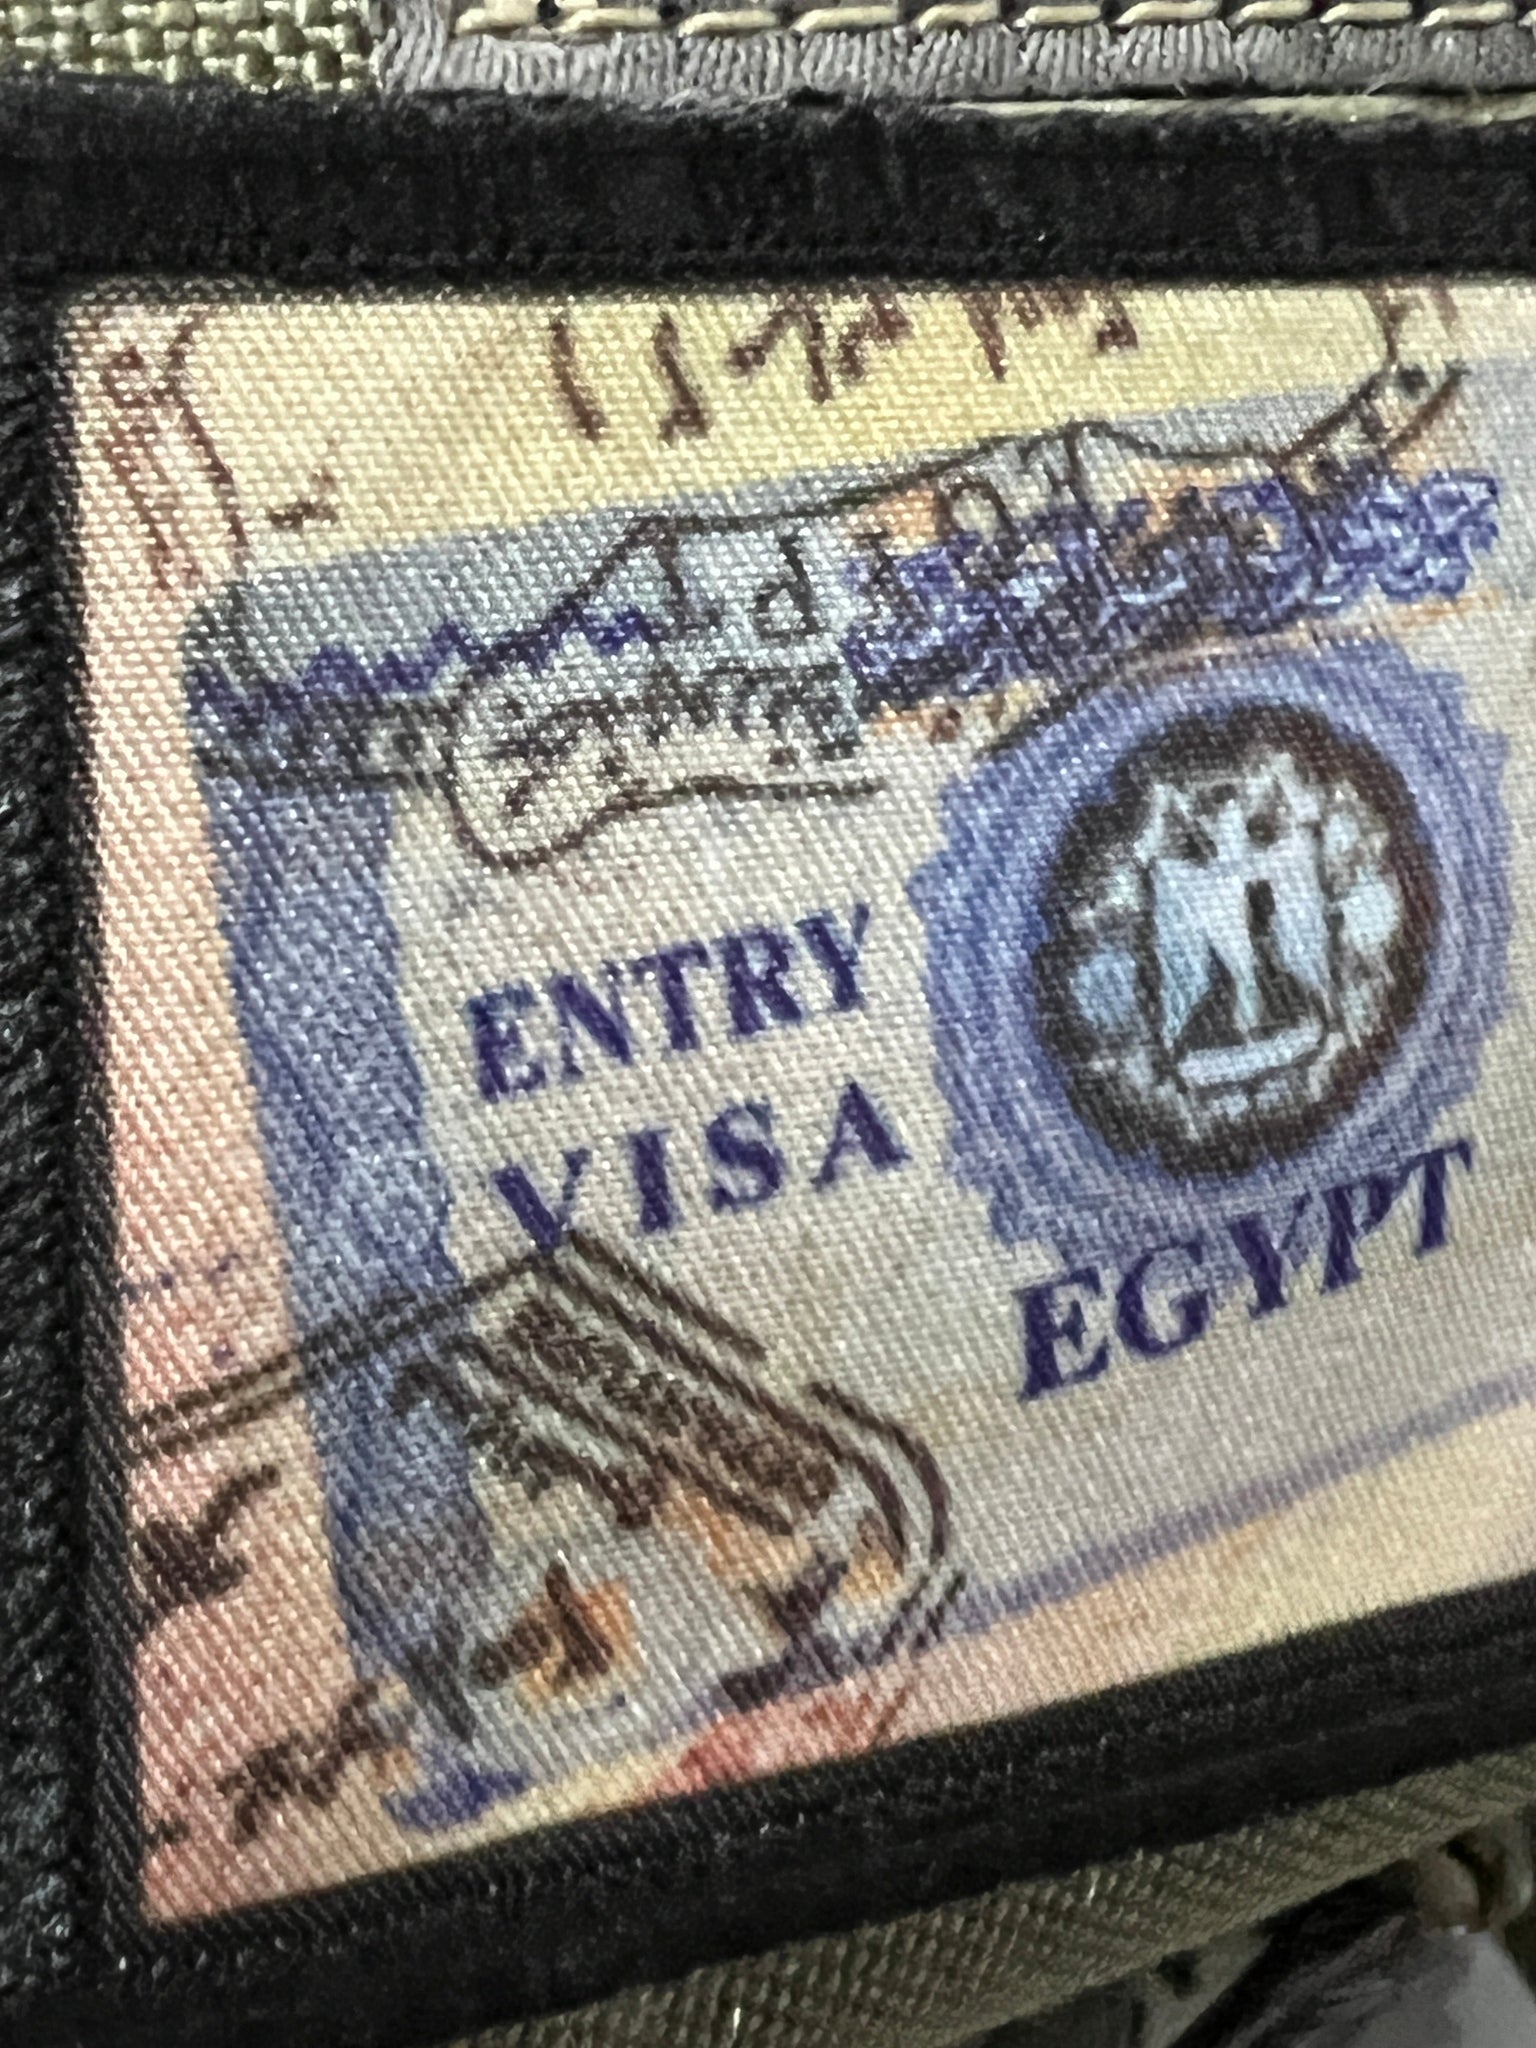 Egypt Passport Stamp Morale Patch 2x3